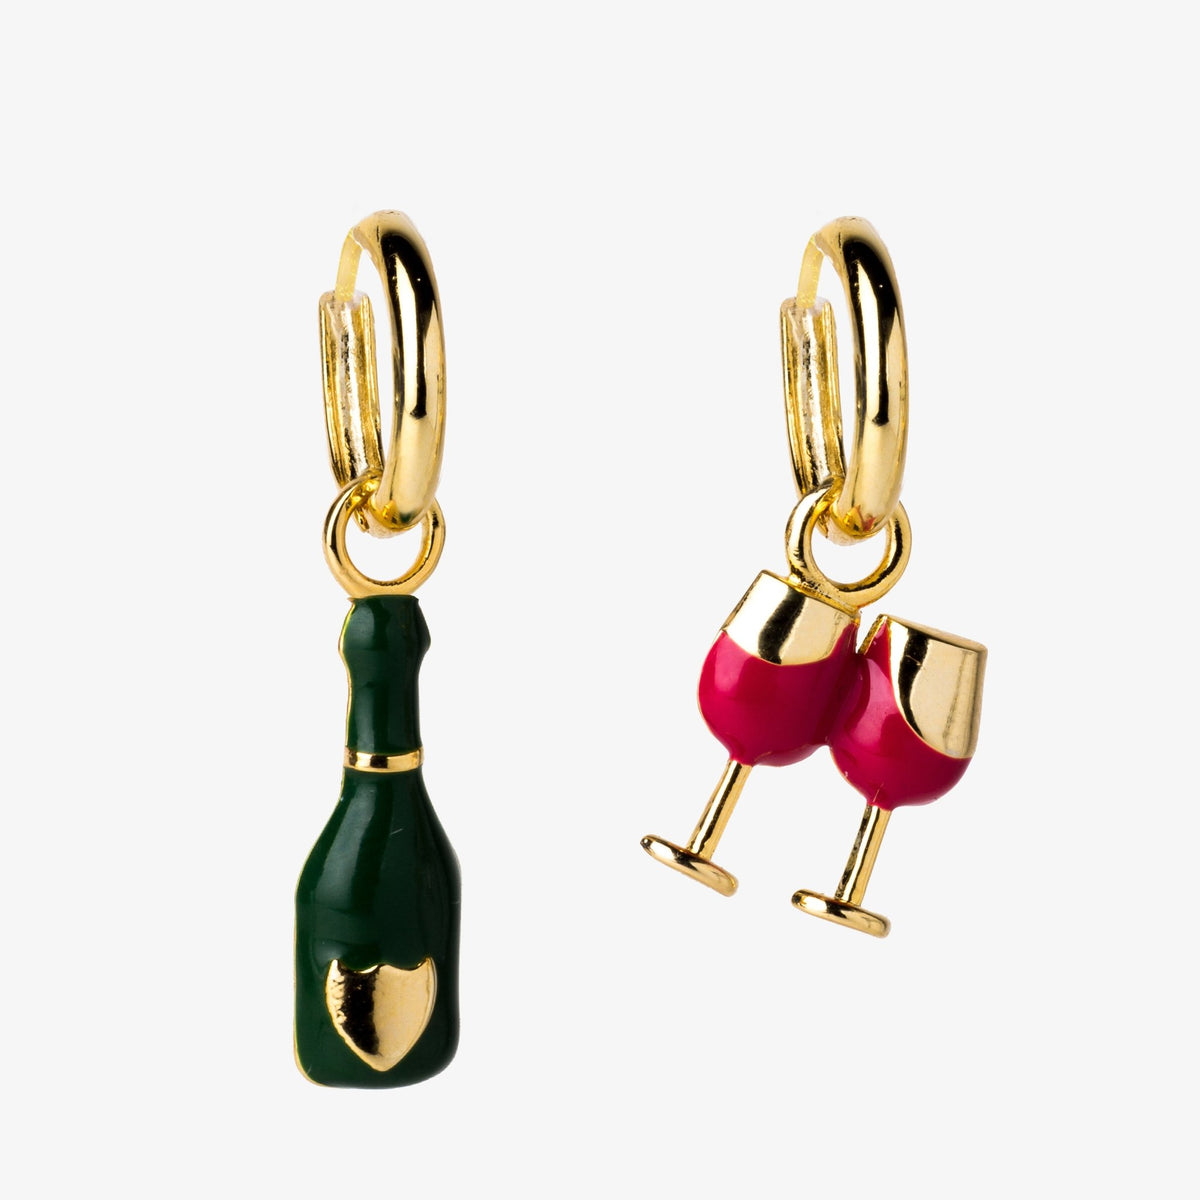 Champagne &amp; Glass Hoop Earrings - Yellow Owl Workshop